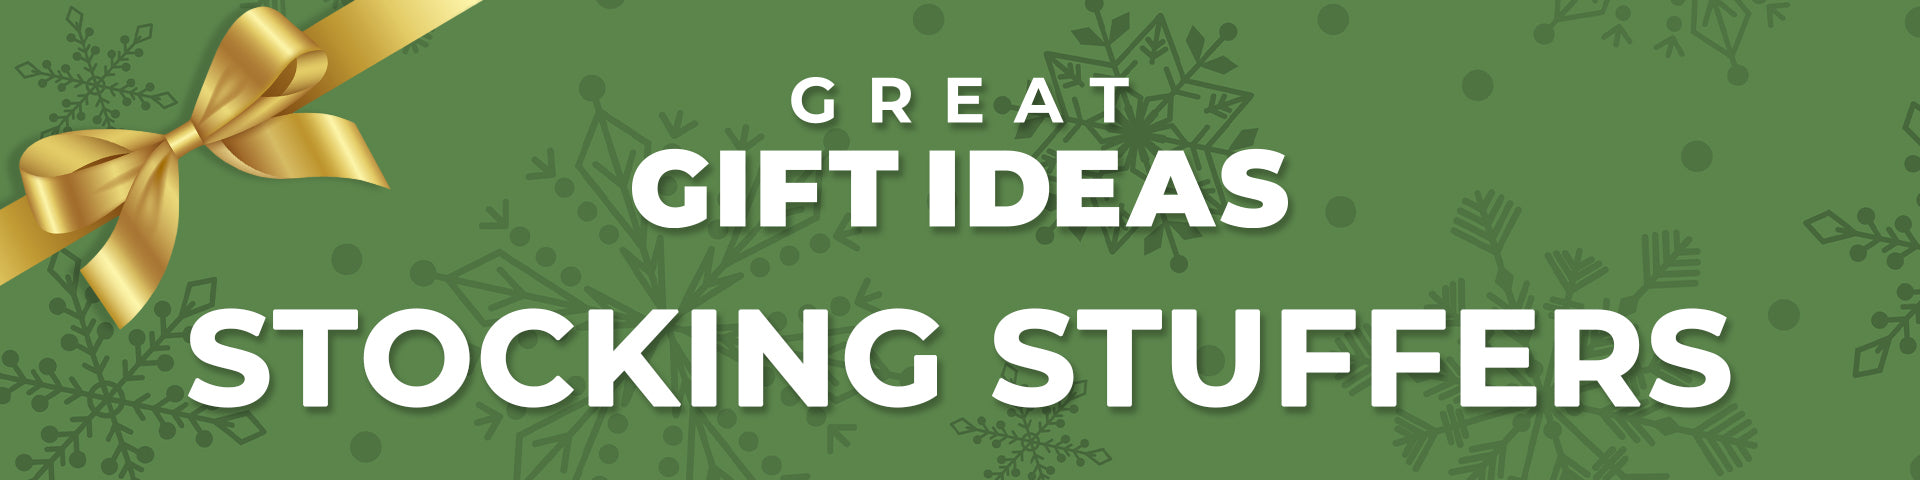 Great Gift Ideas - Stocking Stuffers